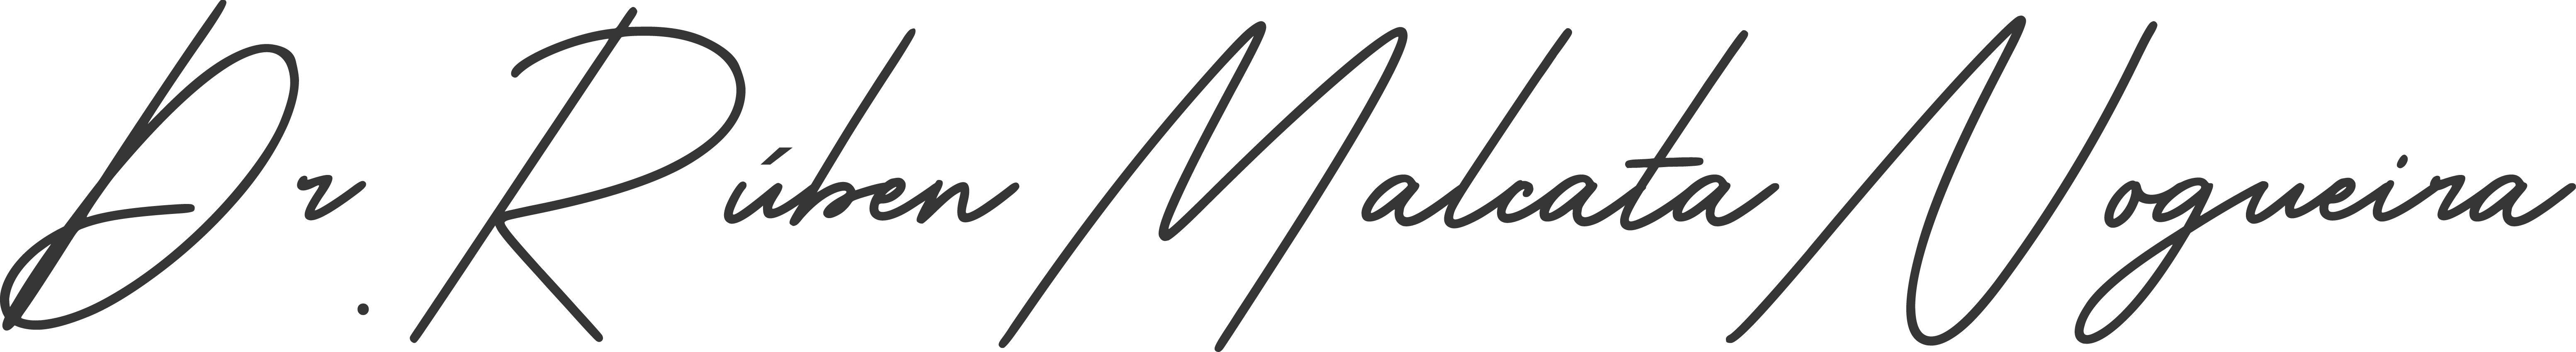 Dr Ruben Malcata Logo